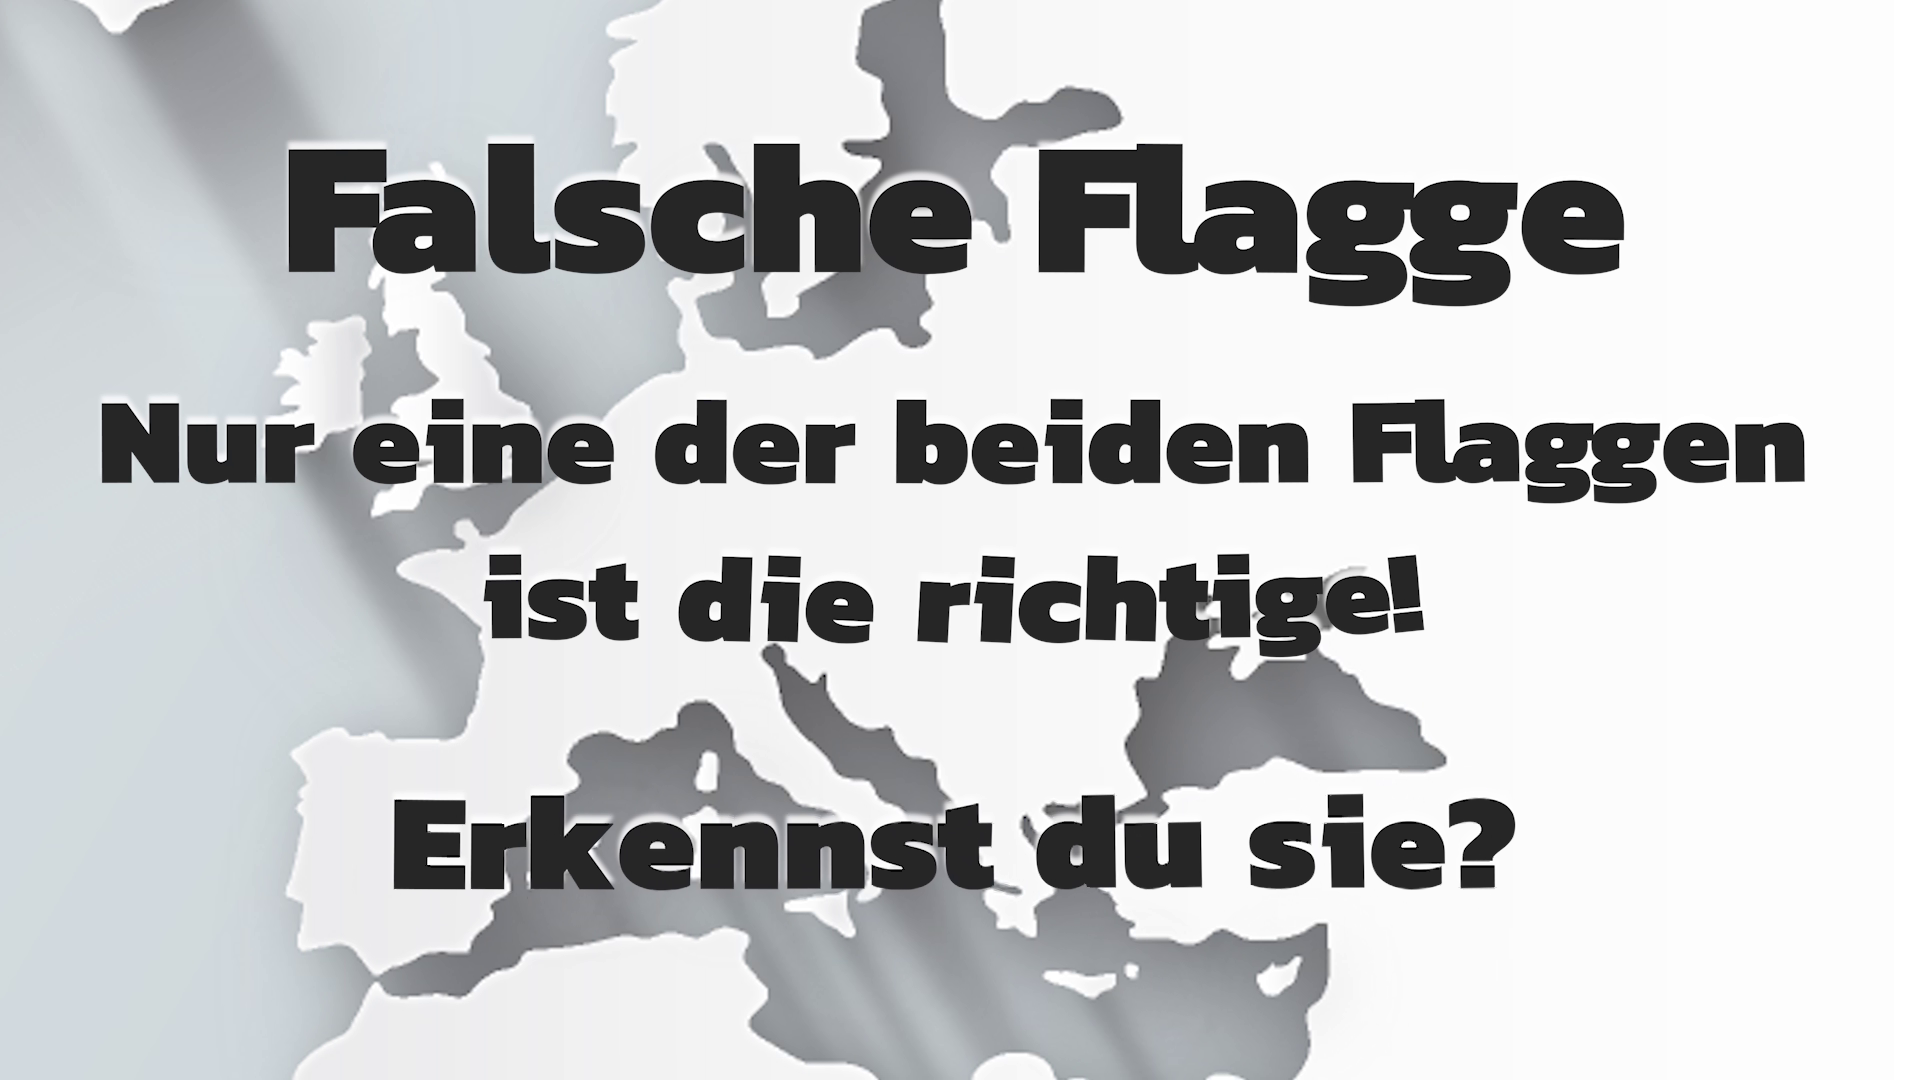 Falsche Flagge!